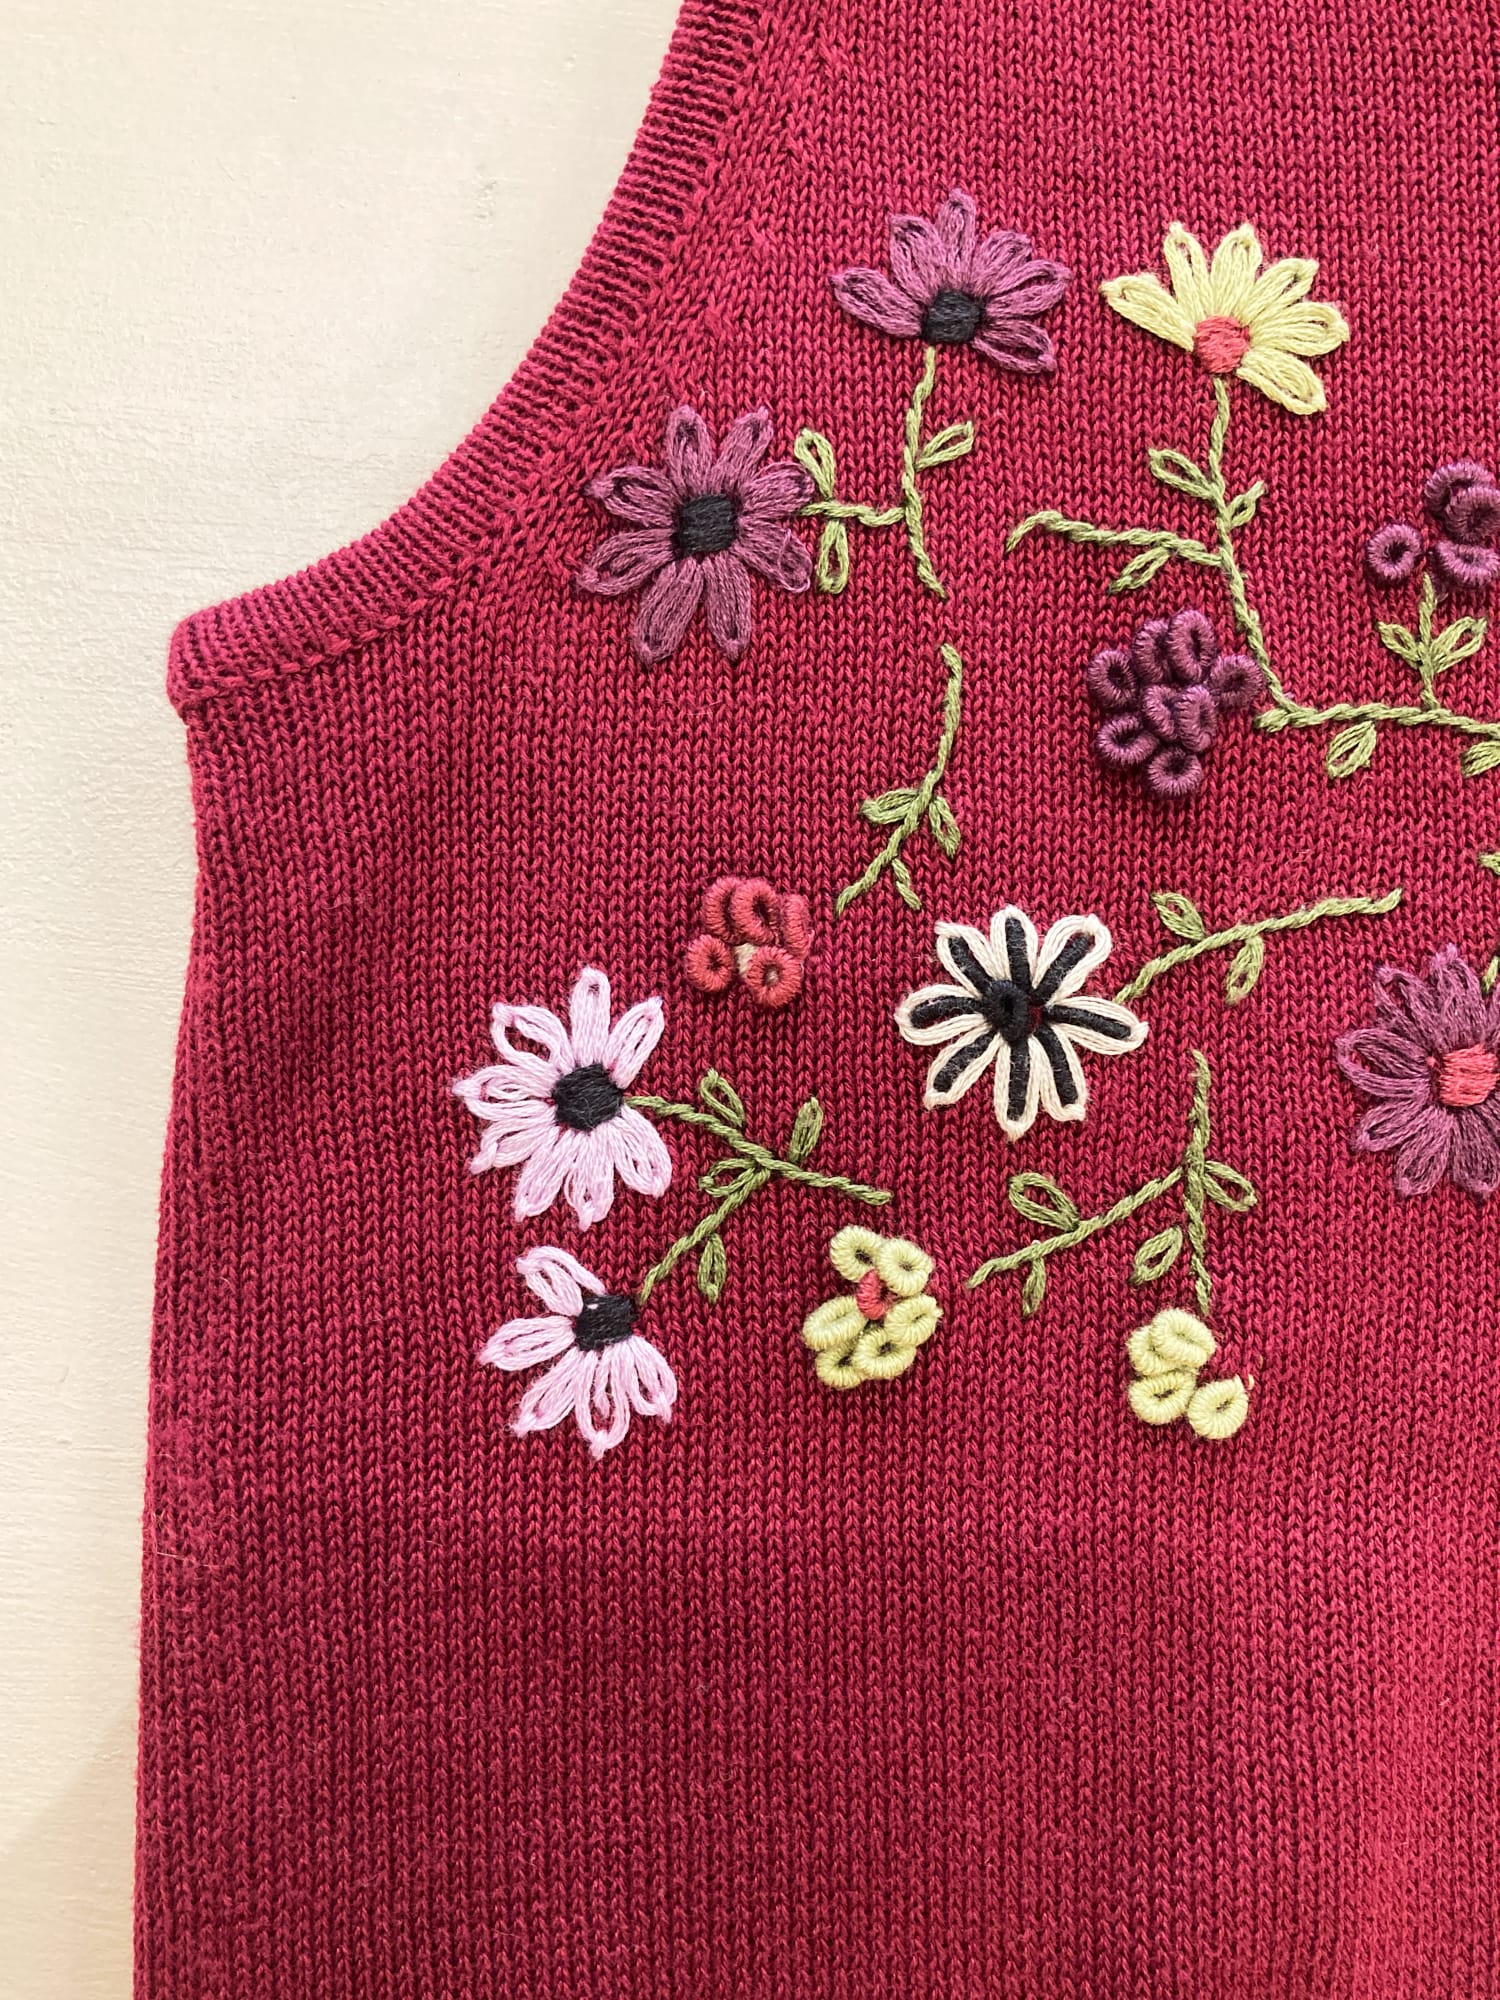 Corinne Sarrut burgundy cotton knit vest with 3D floral embroidery